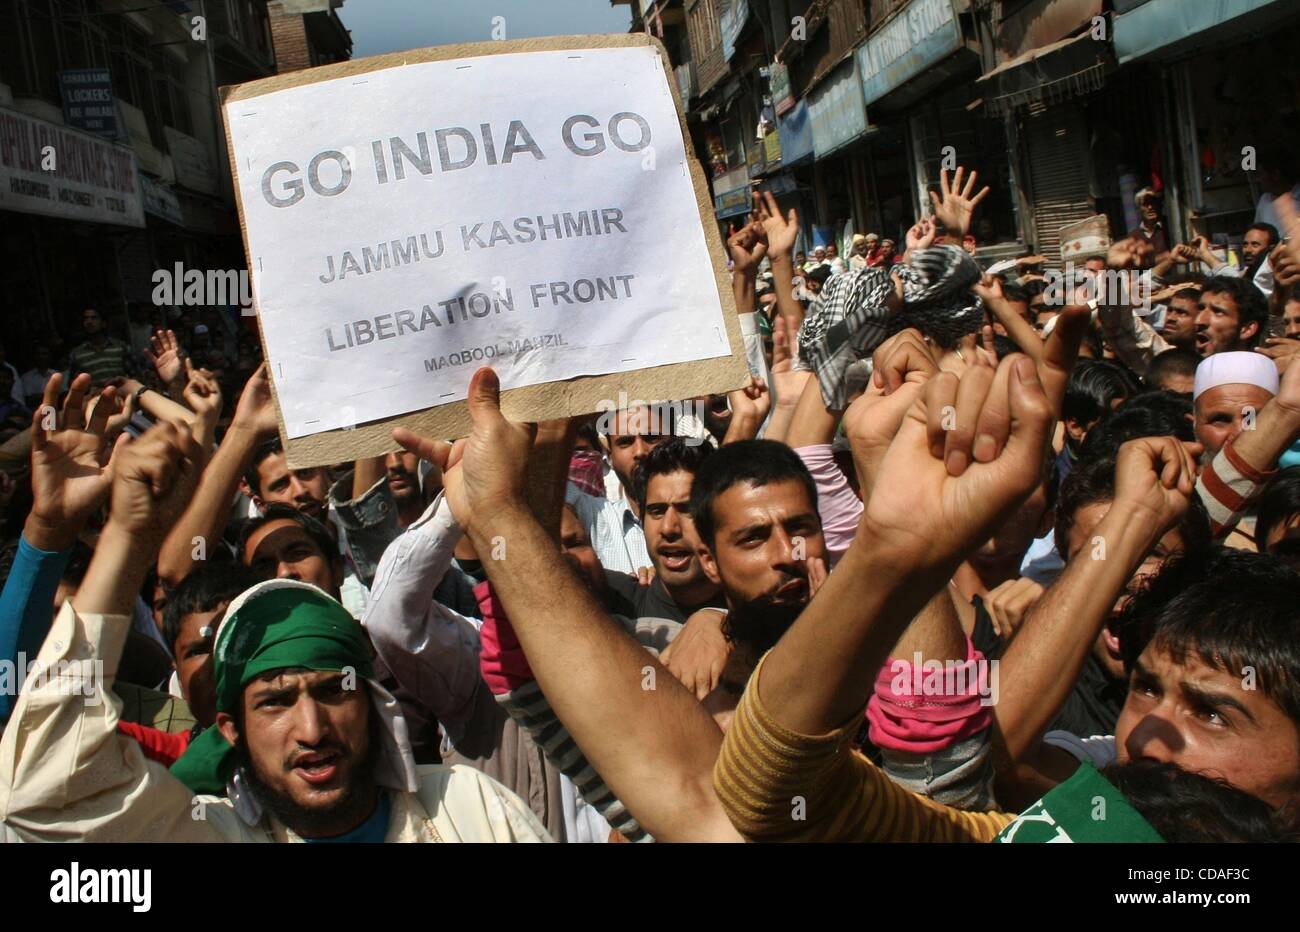 aug-27-2010-kashmir-srinagar-india-kashmiri-muslim-protesters-shout-CDAF3C.jpg